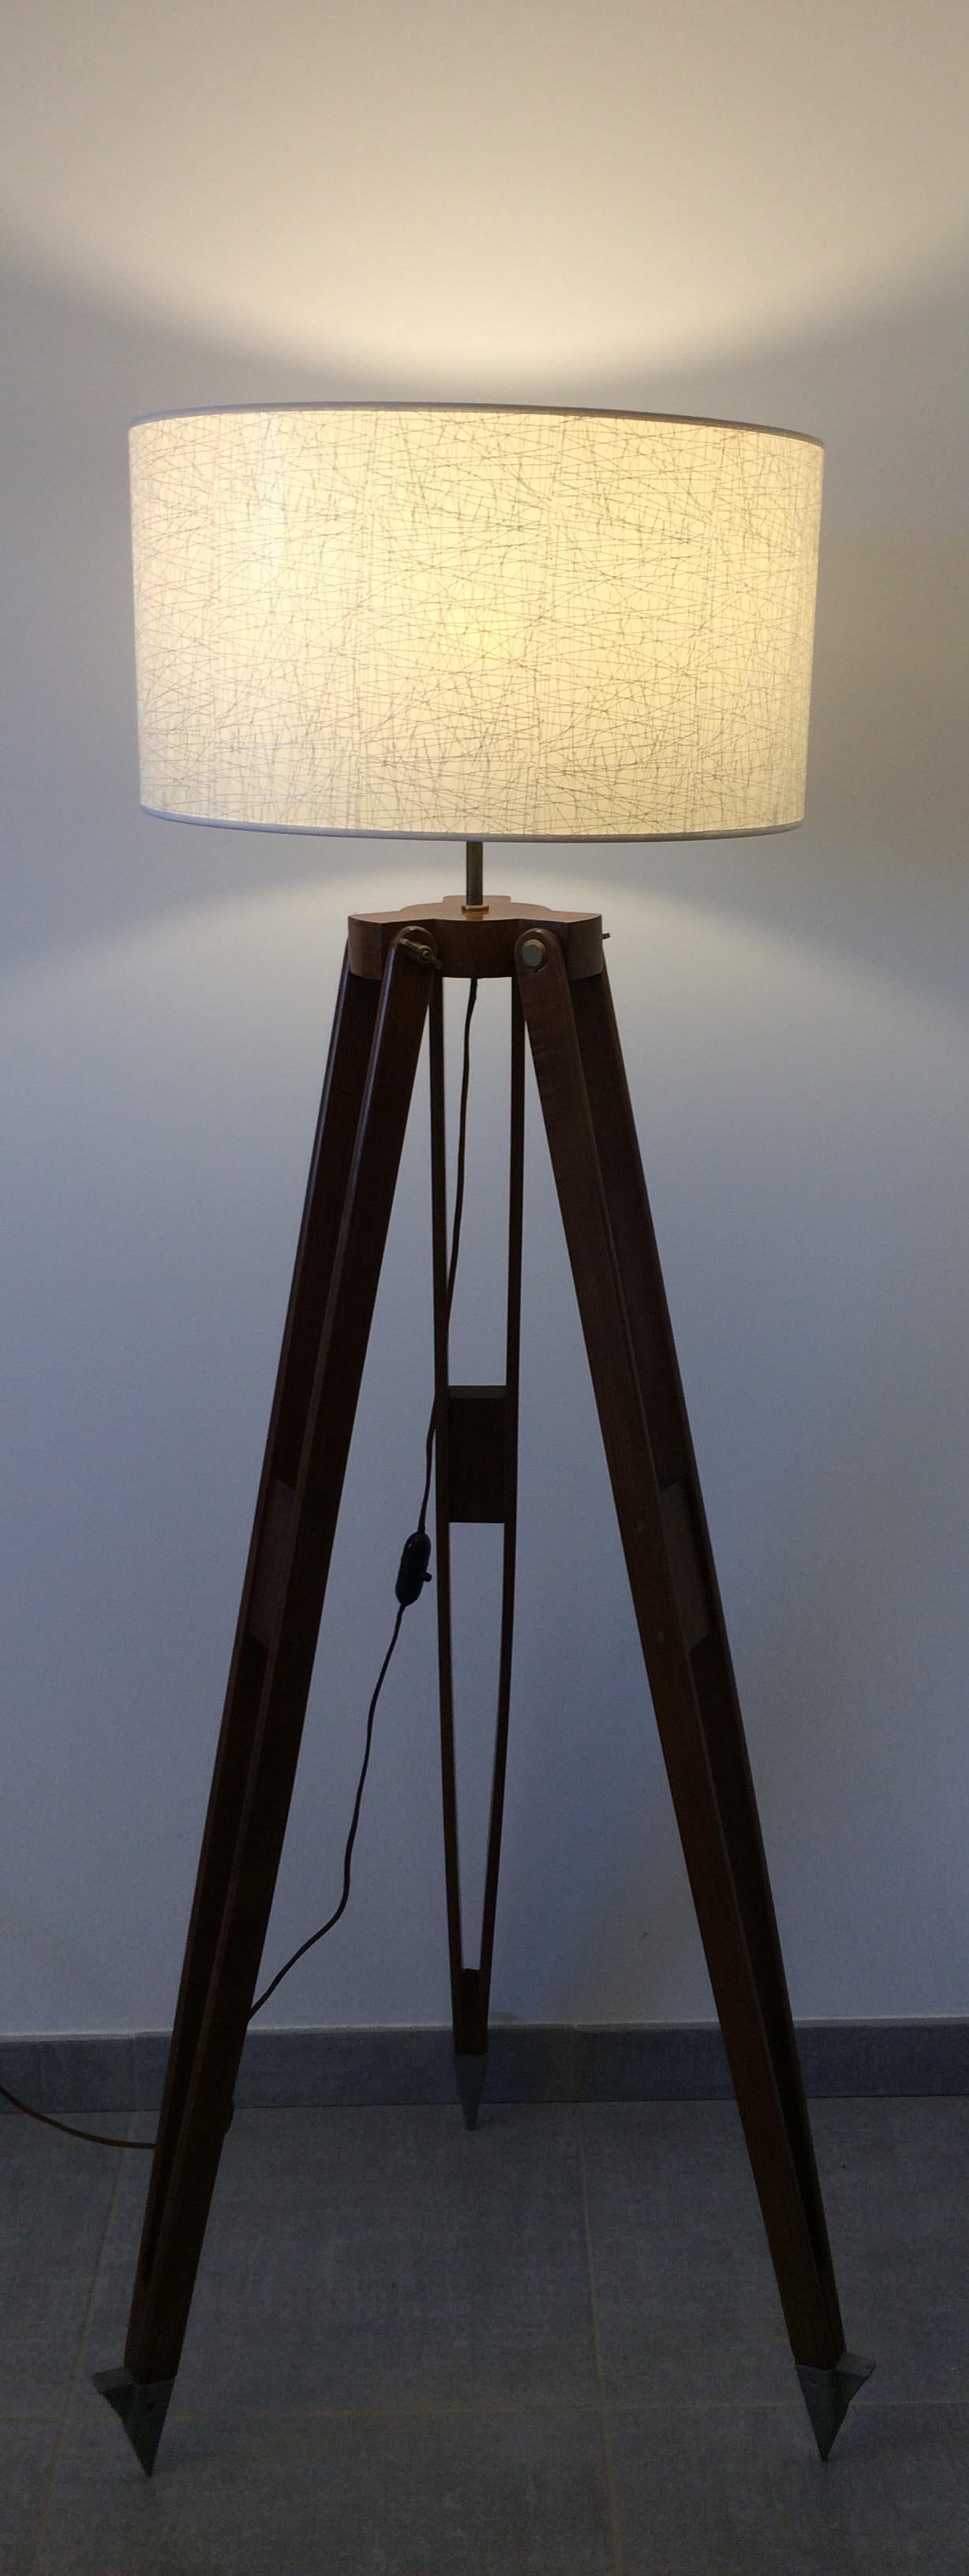 20th Century Wooden Tripod Floor Lamp by H. Morin, Paris